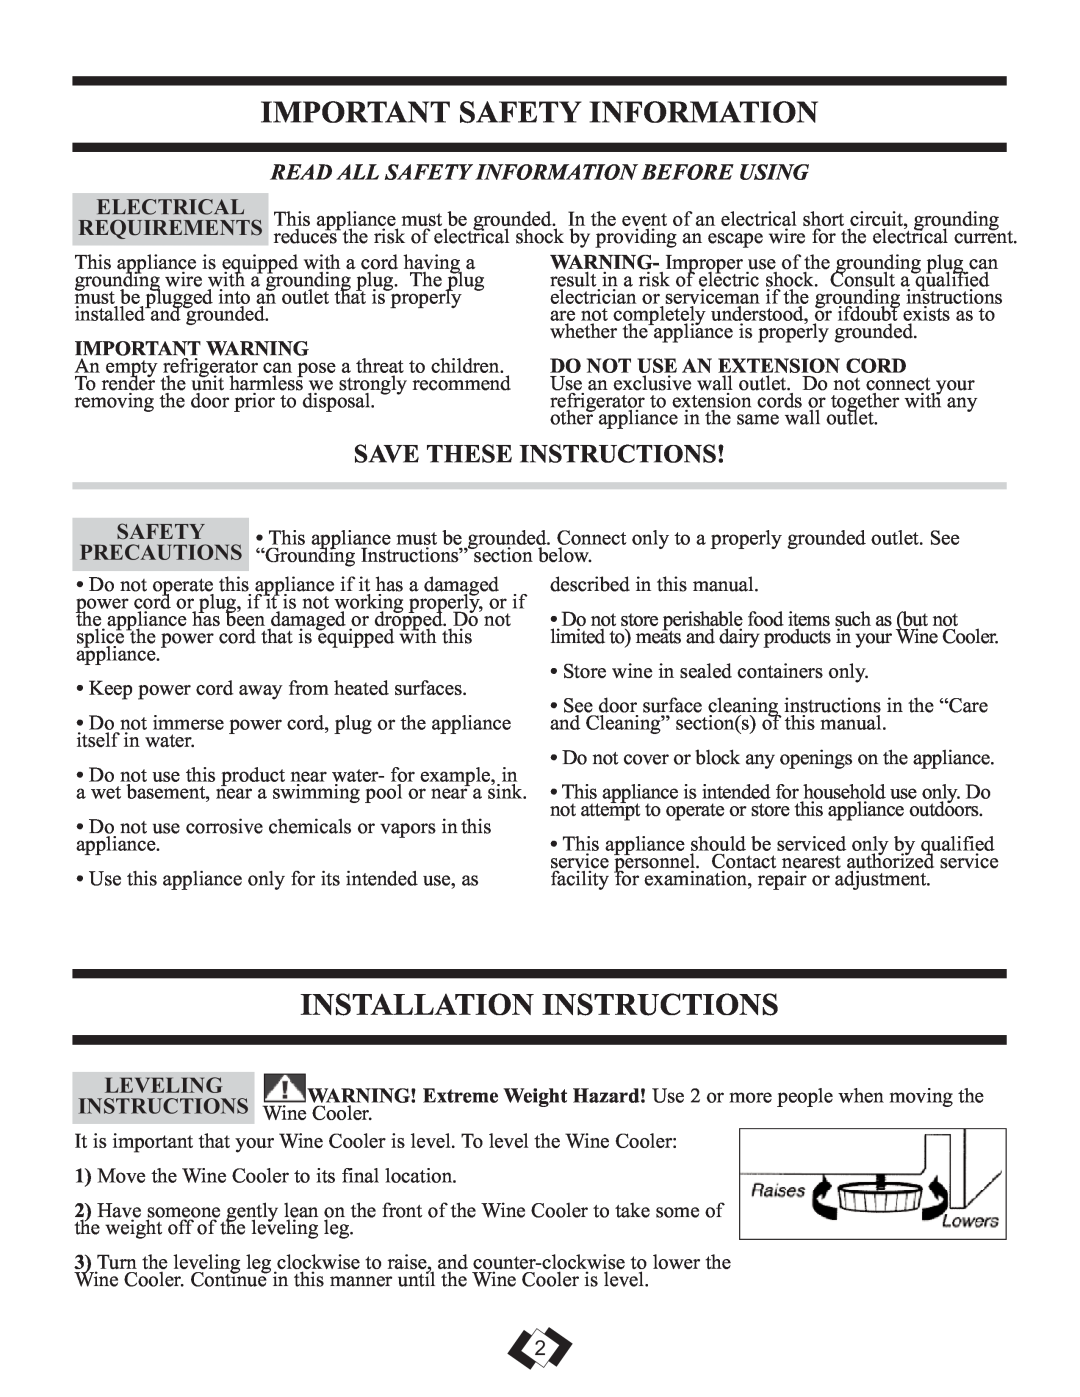 Danby DWC350BLPA Important Safety Information, Installation Instructions, Save These Instructions, Electrical, Precautions 